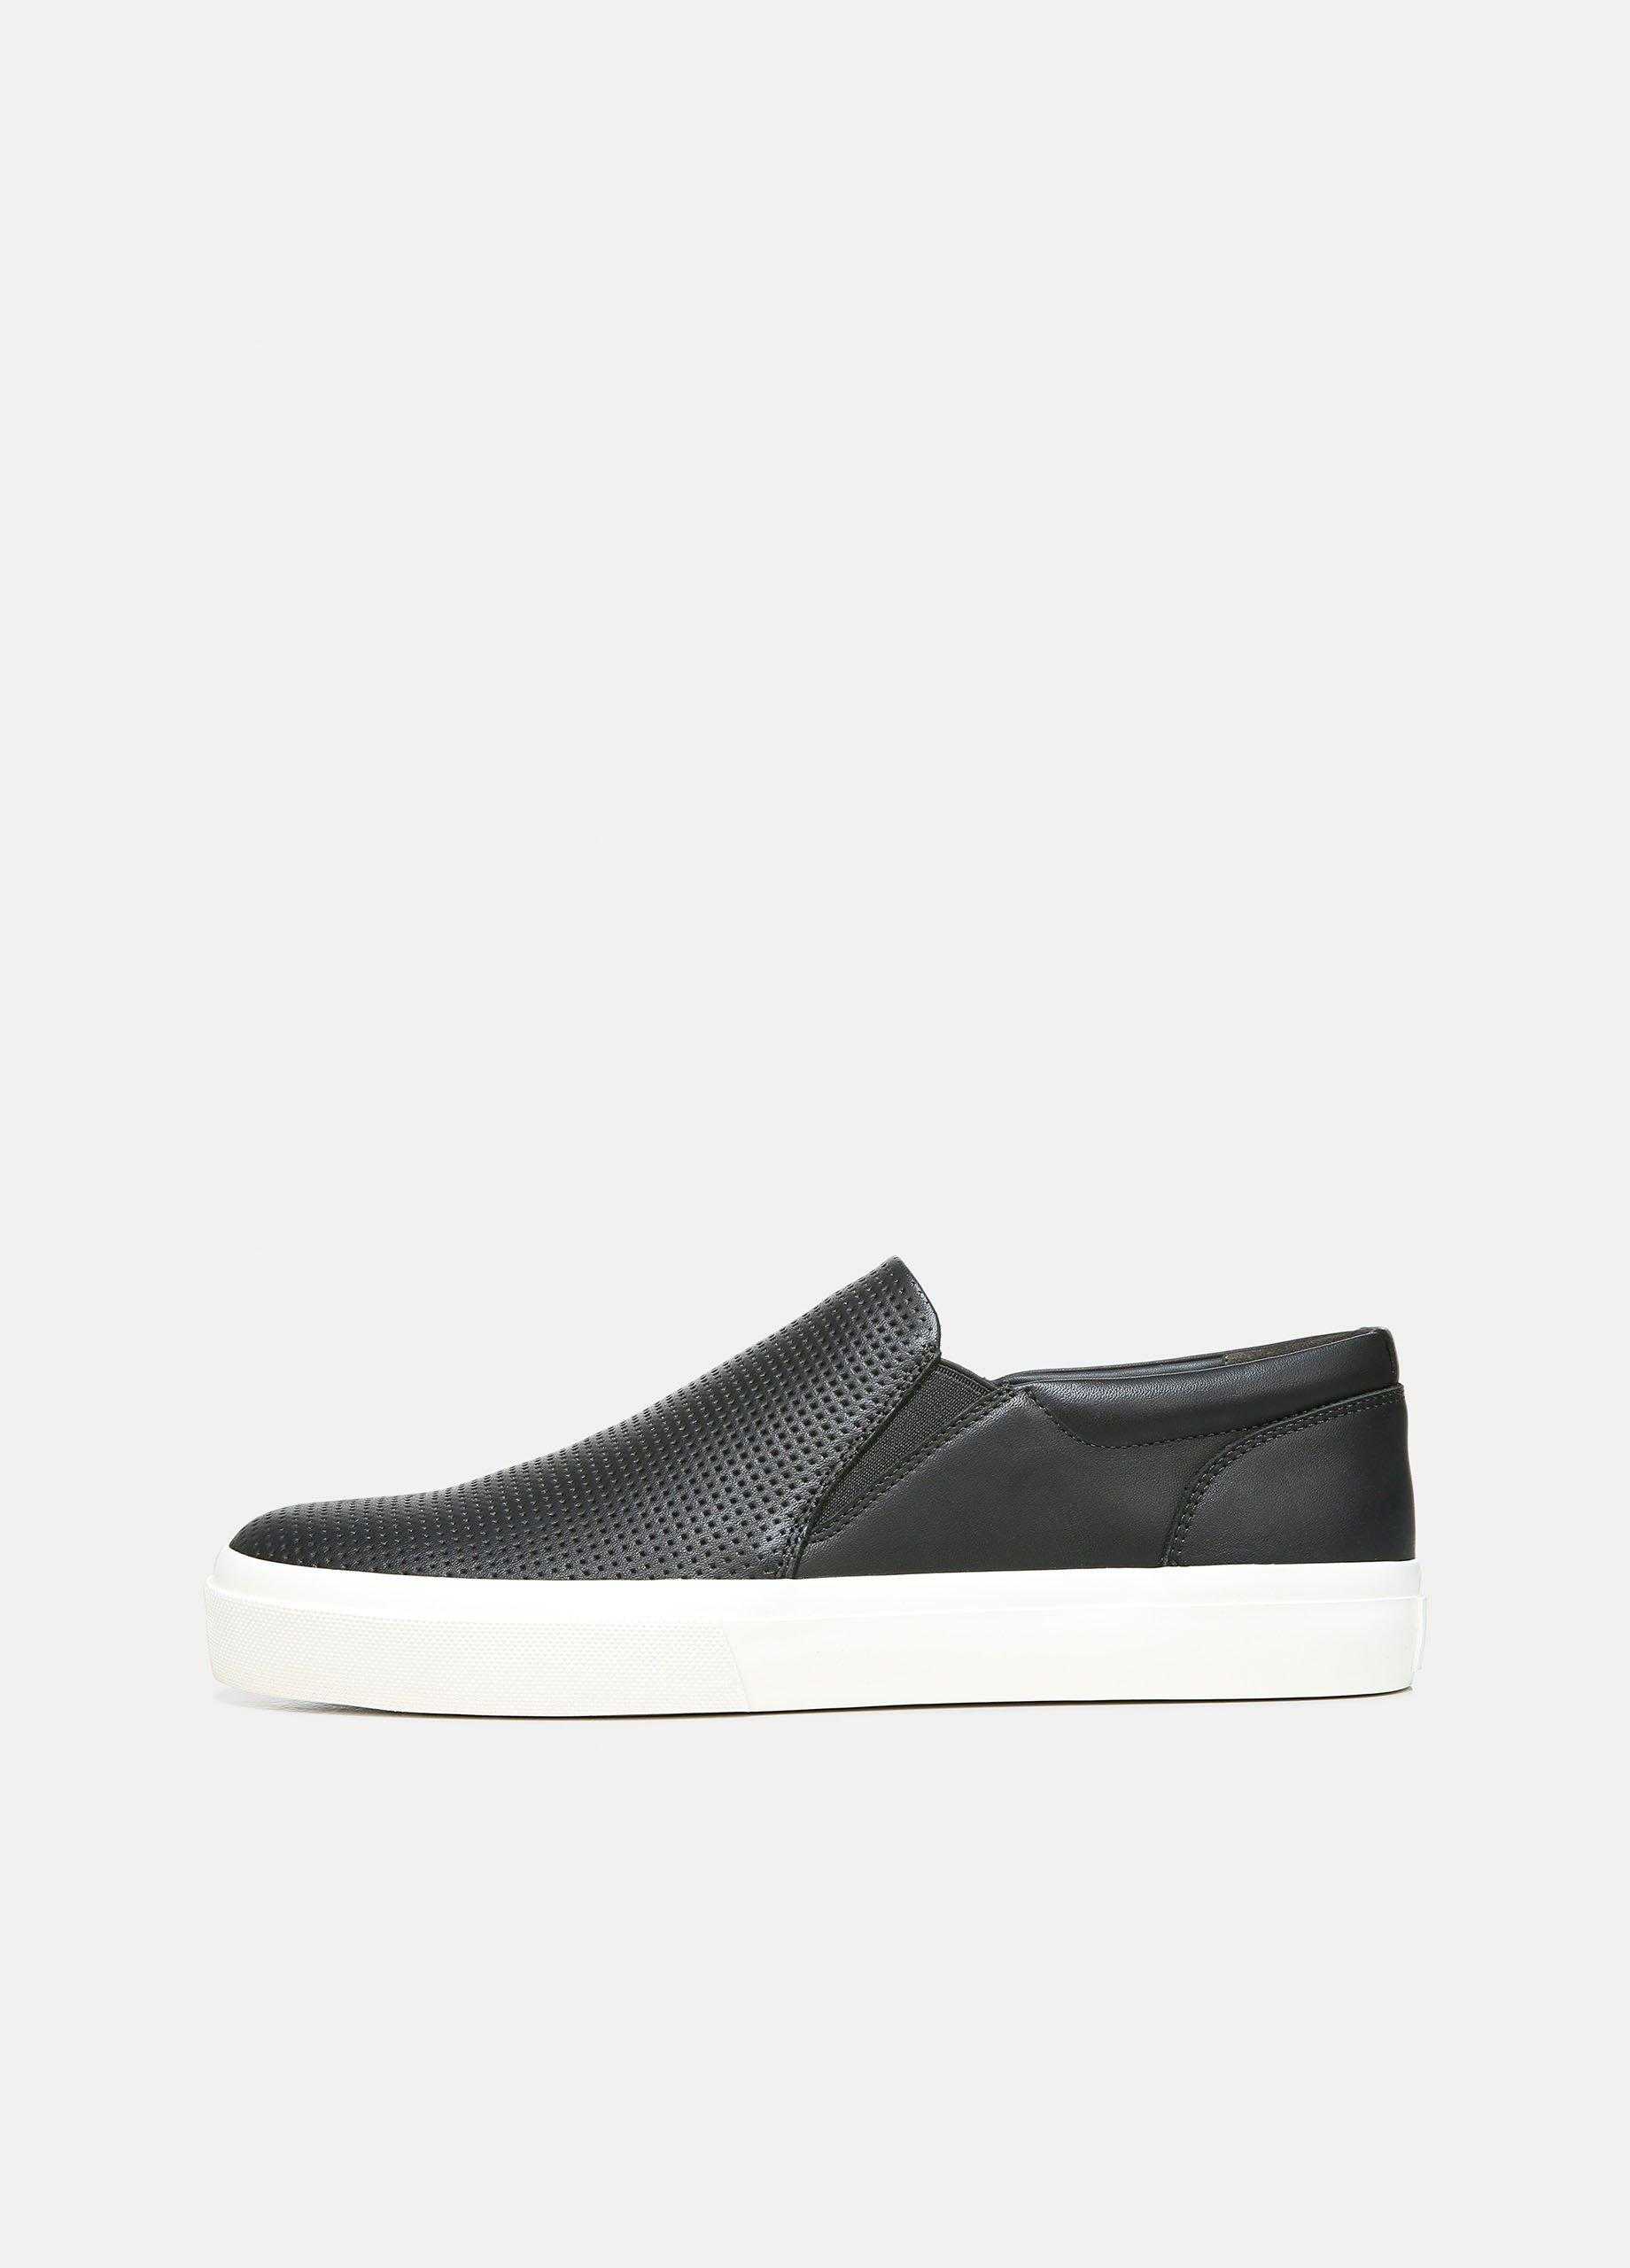 Fletcher Leather Sneaker, Black, Size 12 Vince